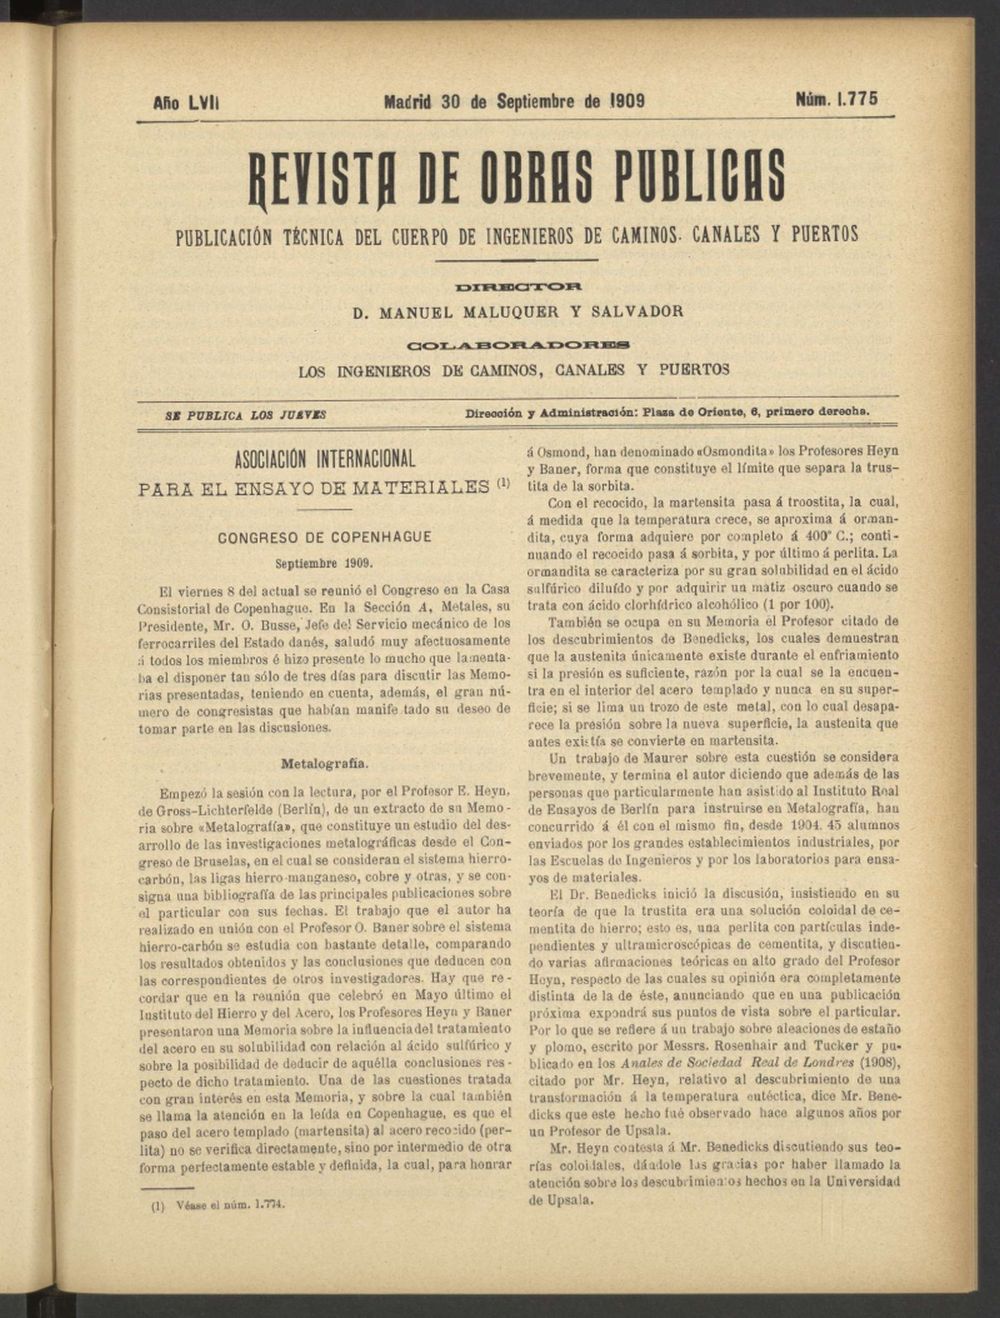 Revista de obras pblicas del 30 de septiembre de 1909